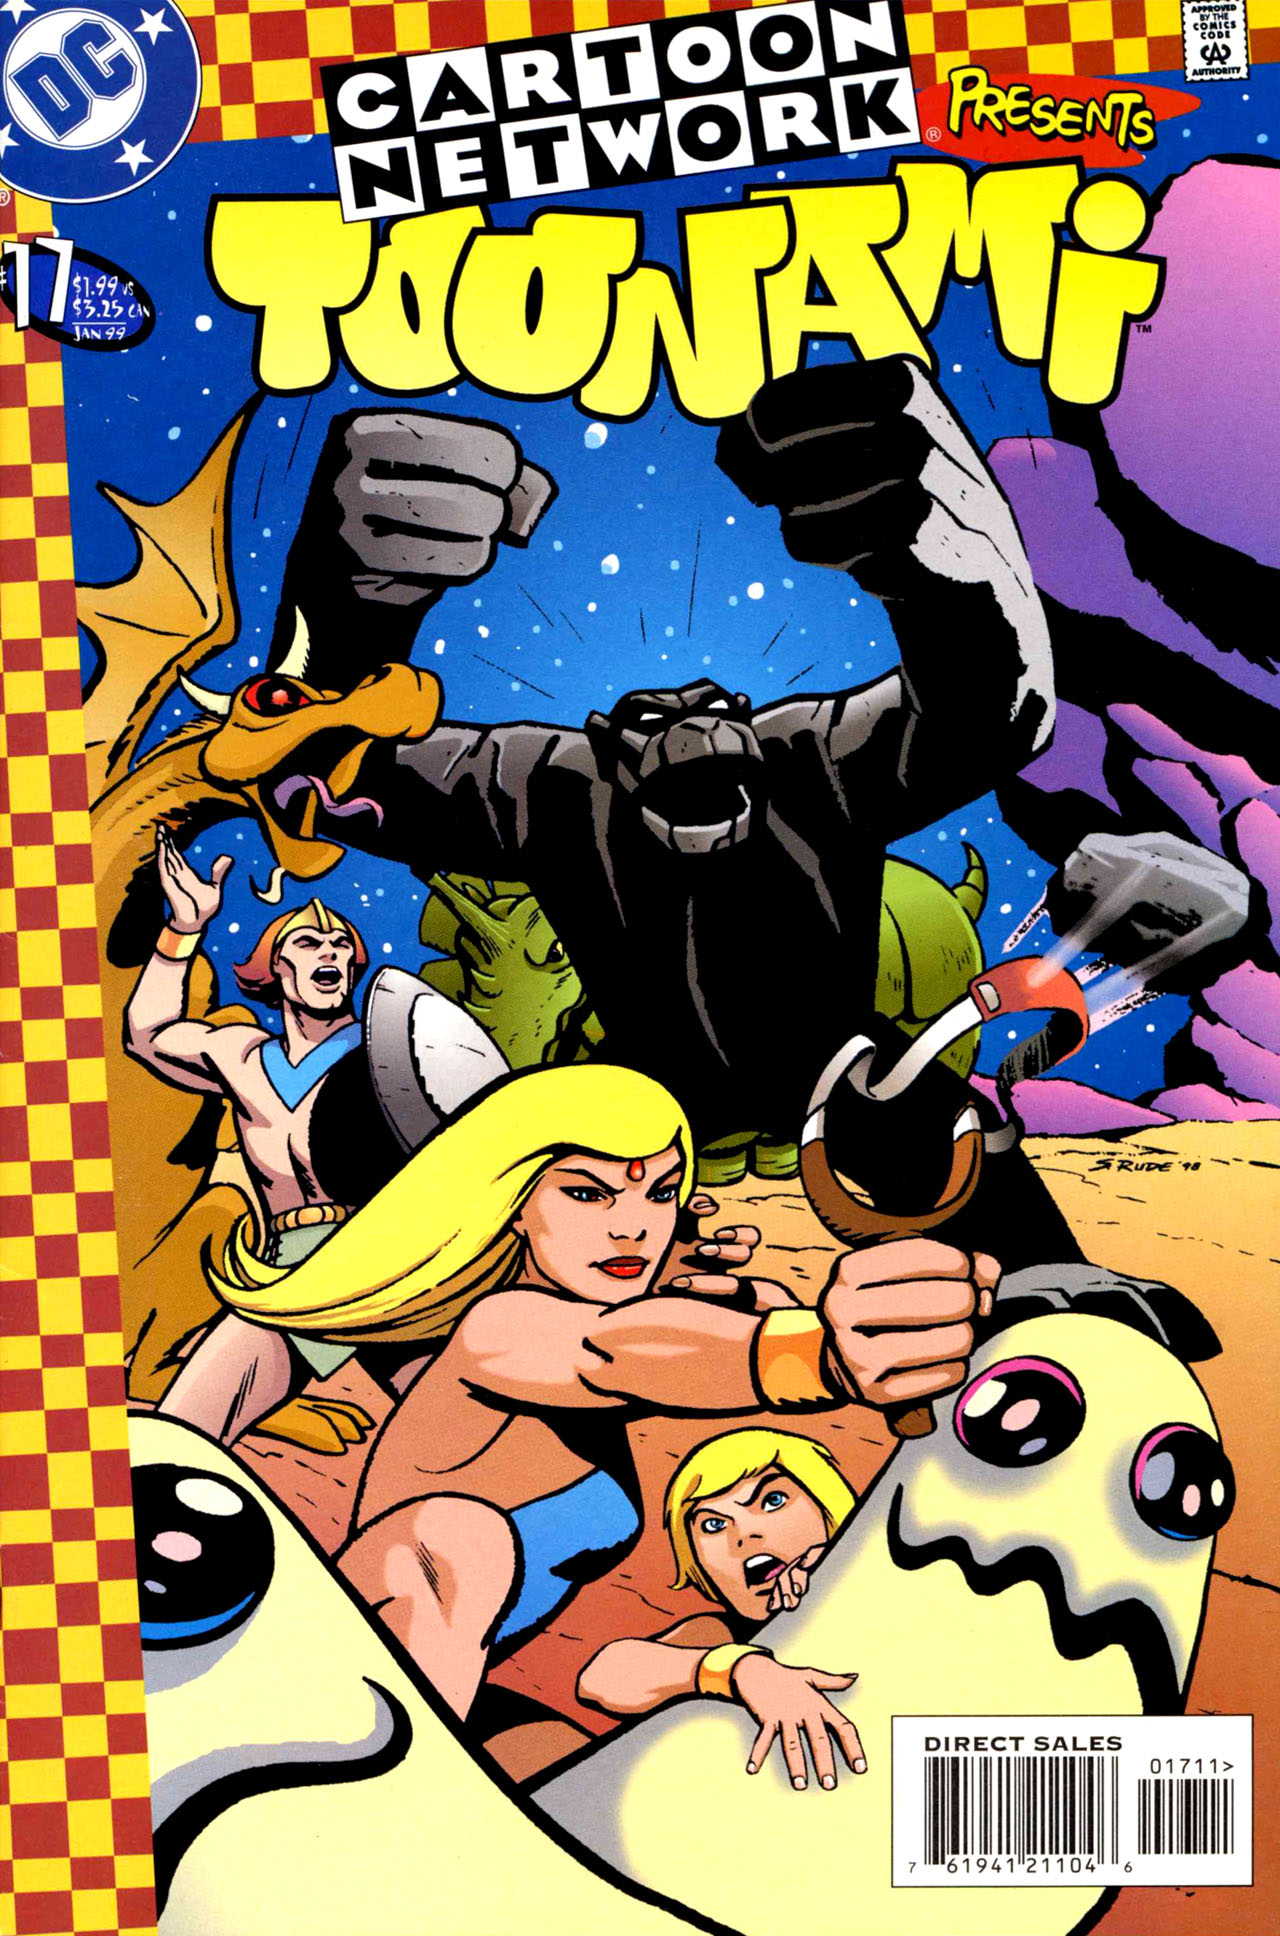 Read online Cartoon Network Presents comic -  Issue #17 - 1